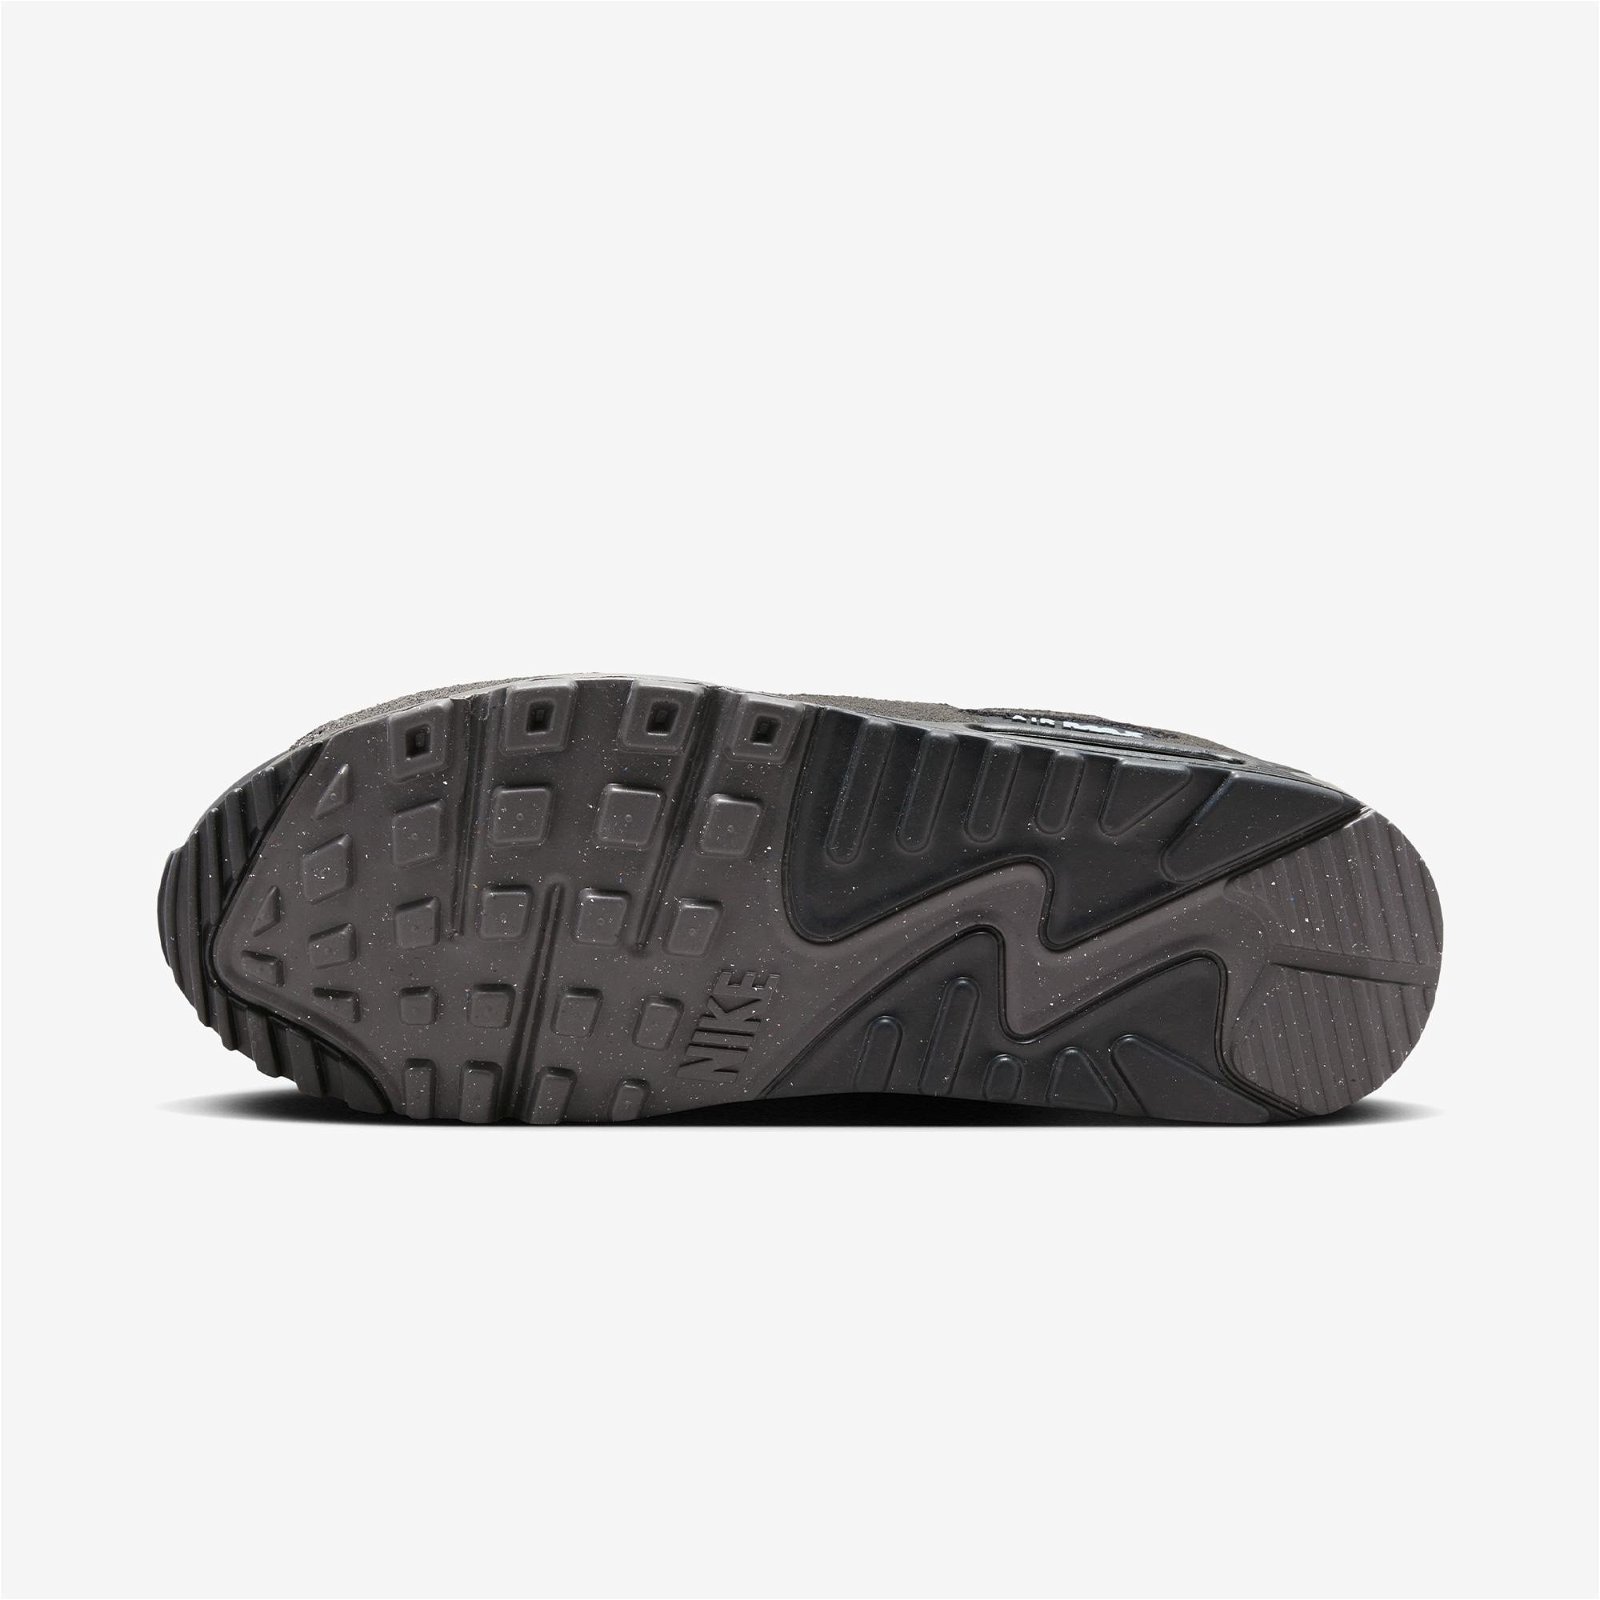 Nike Air Max 90 Erkek Siyah Spor Ayakkabı